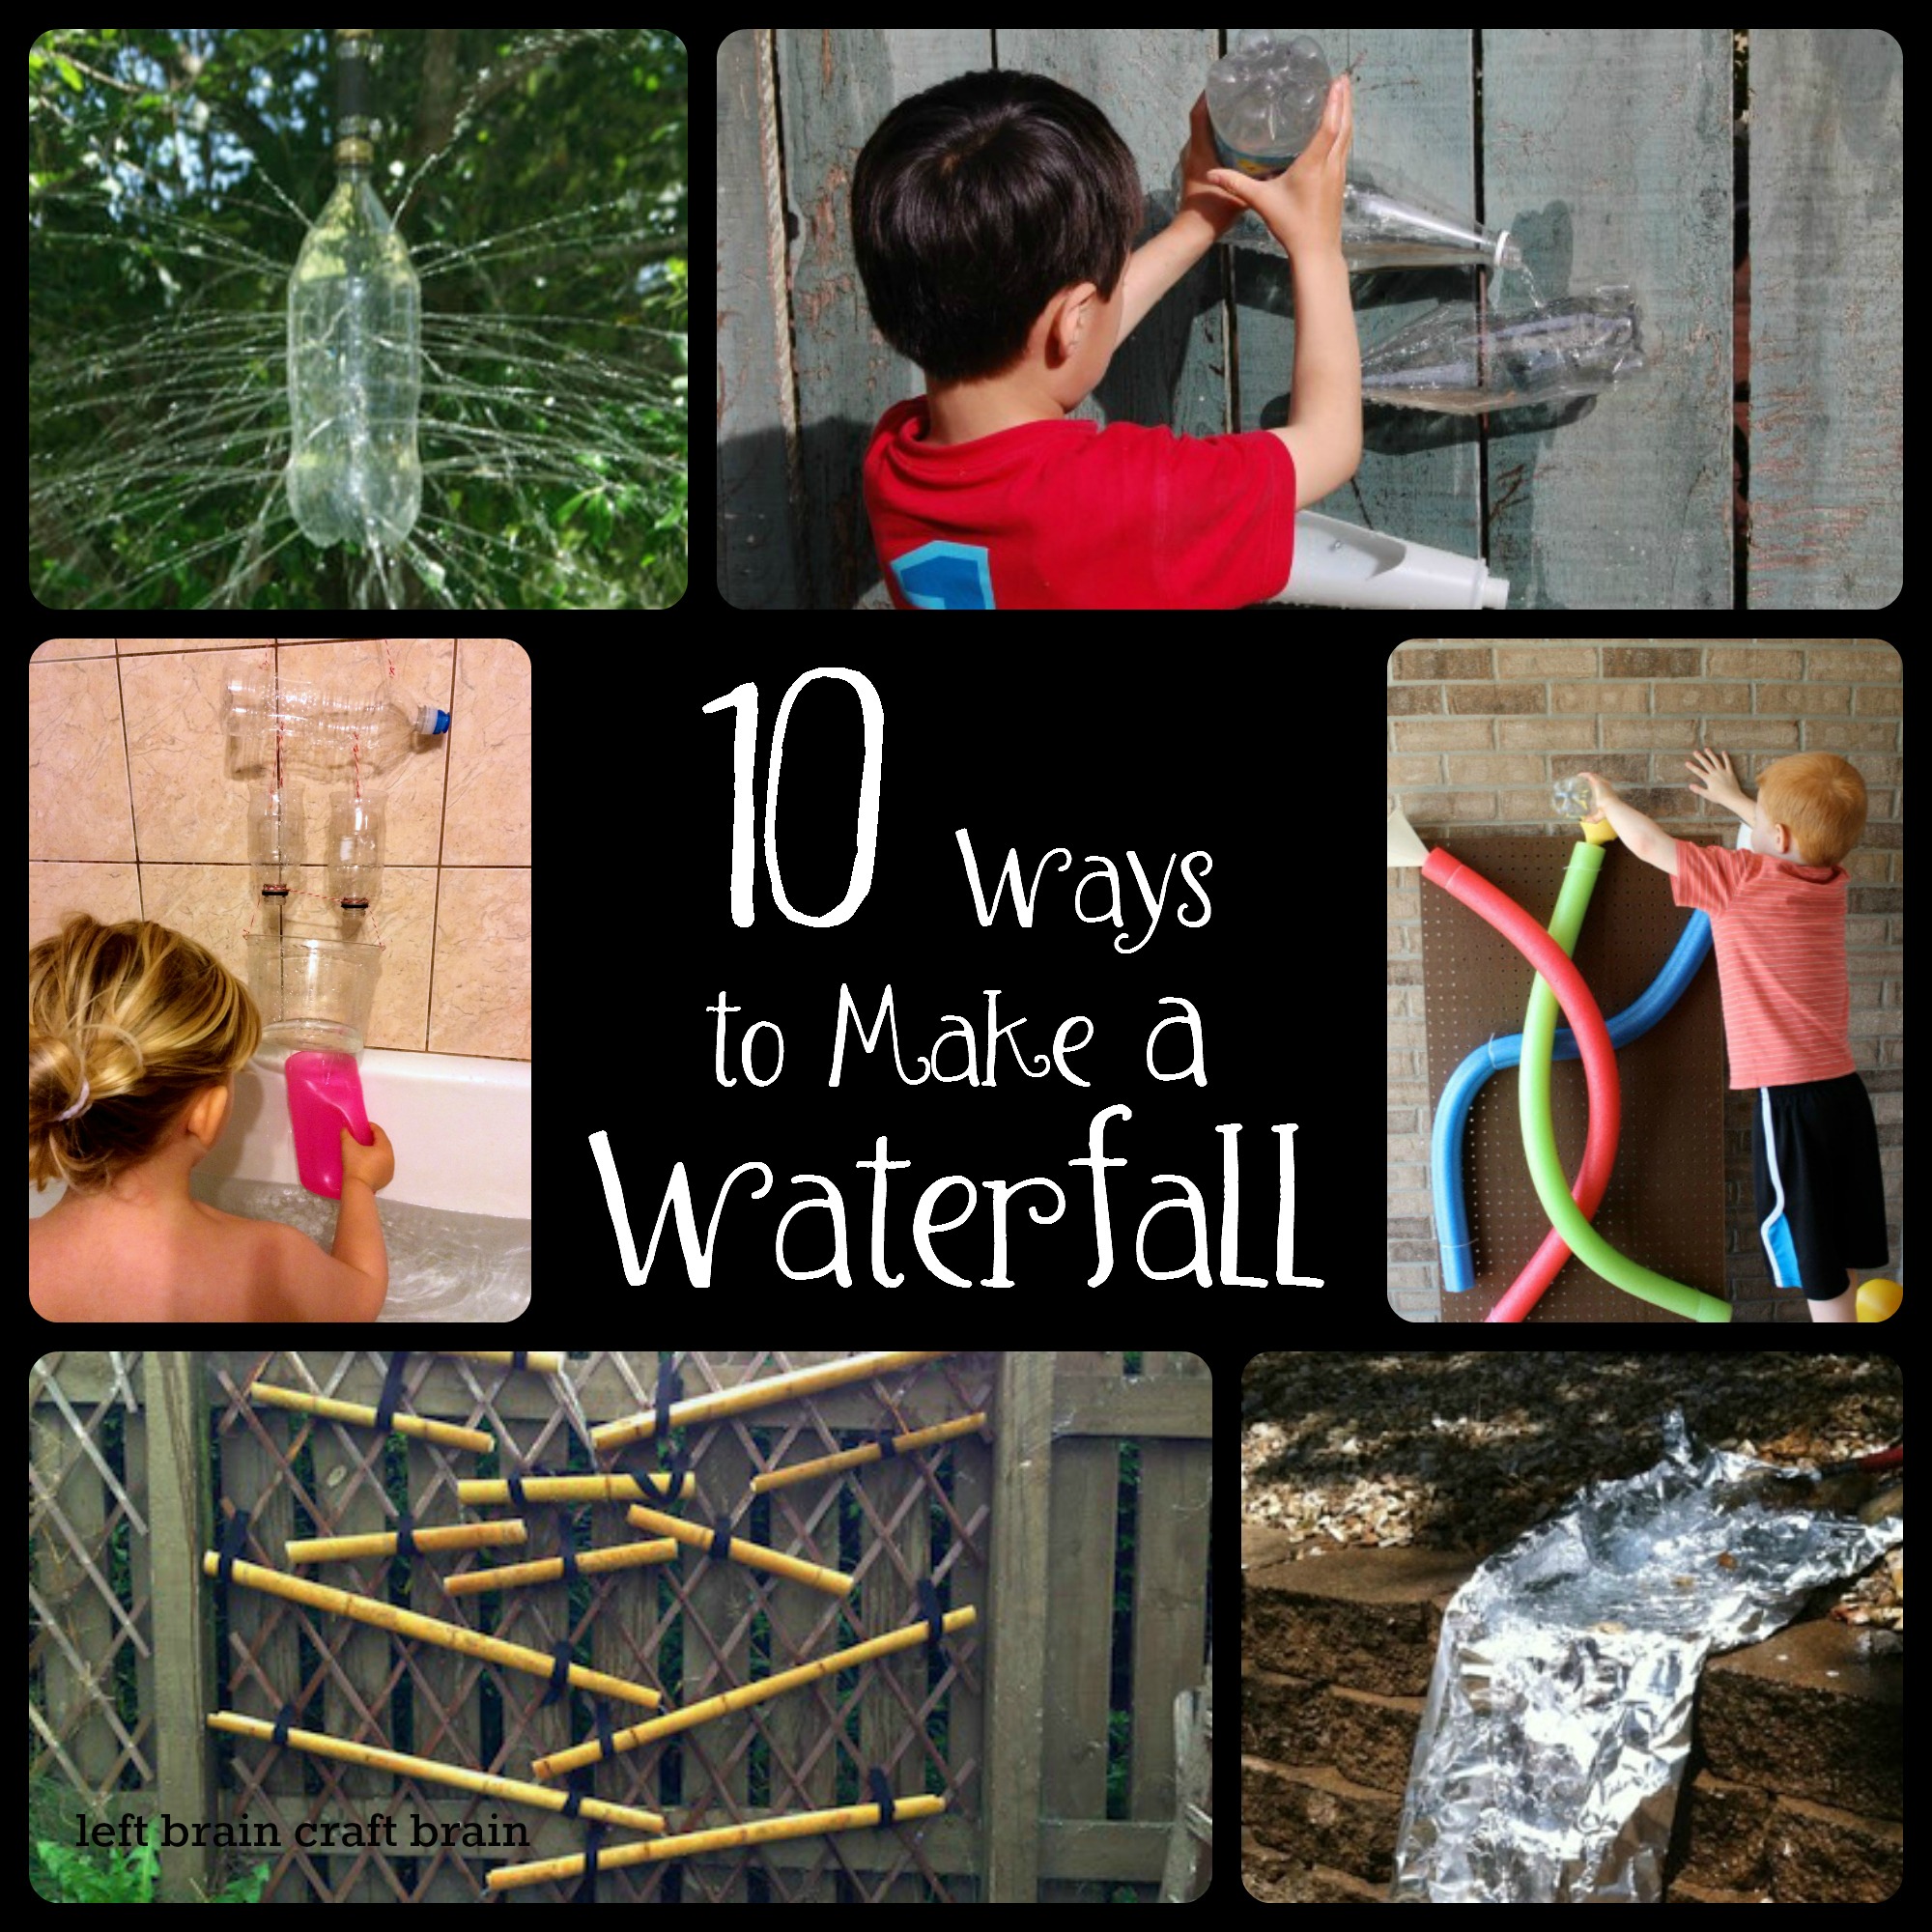 10 ways to make a waterfall left brain craft brain